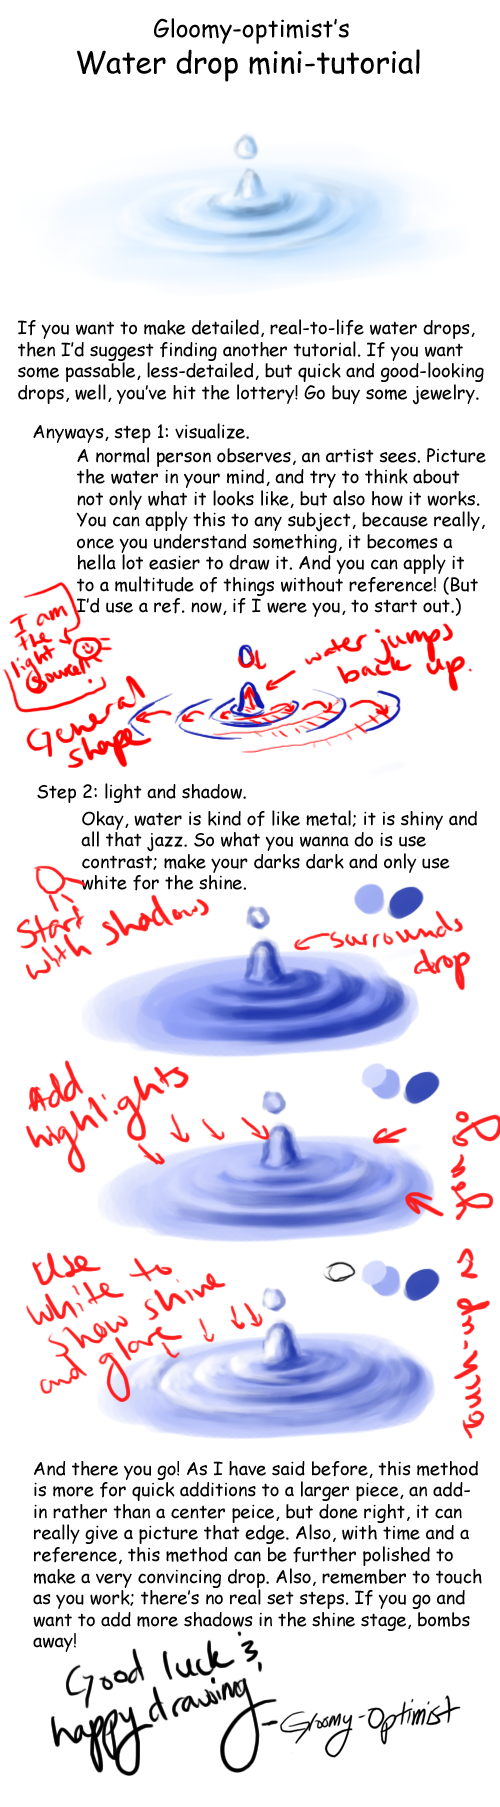 Water drop mini-tutorial